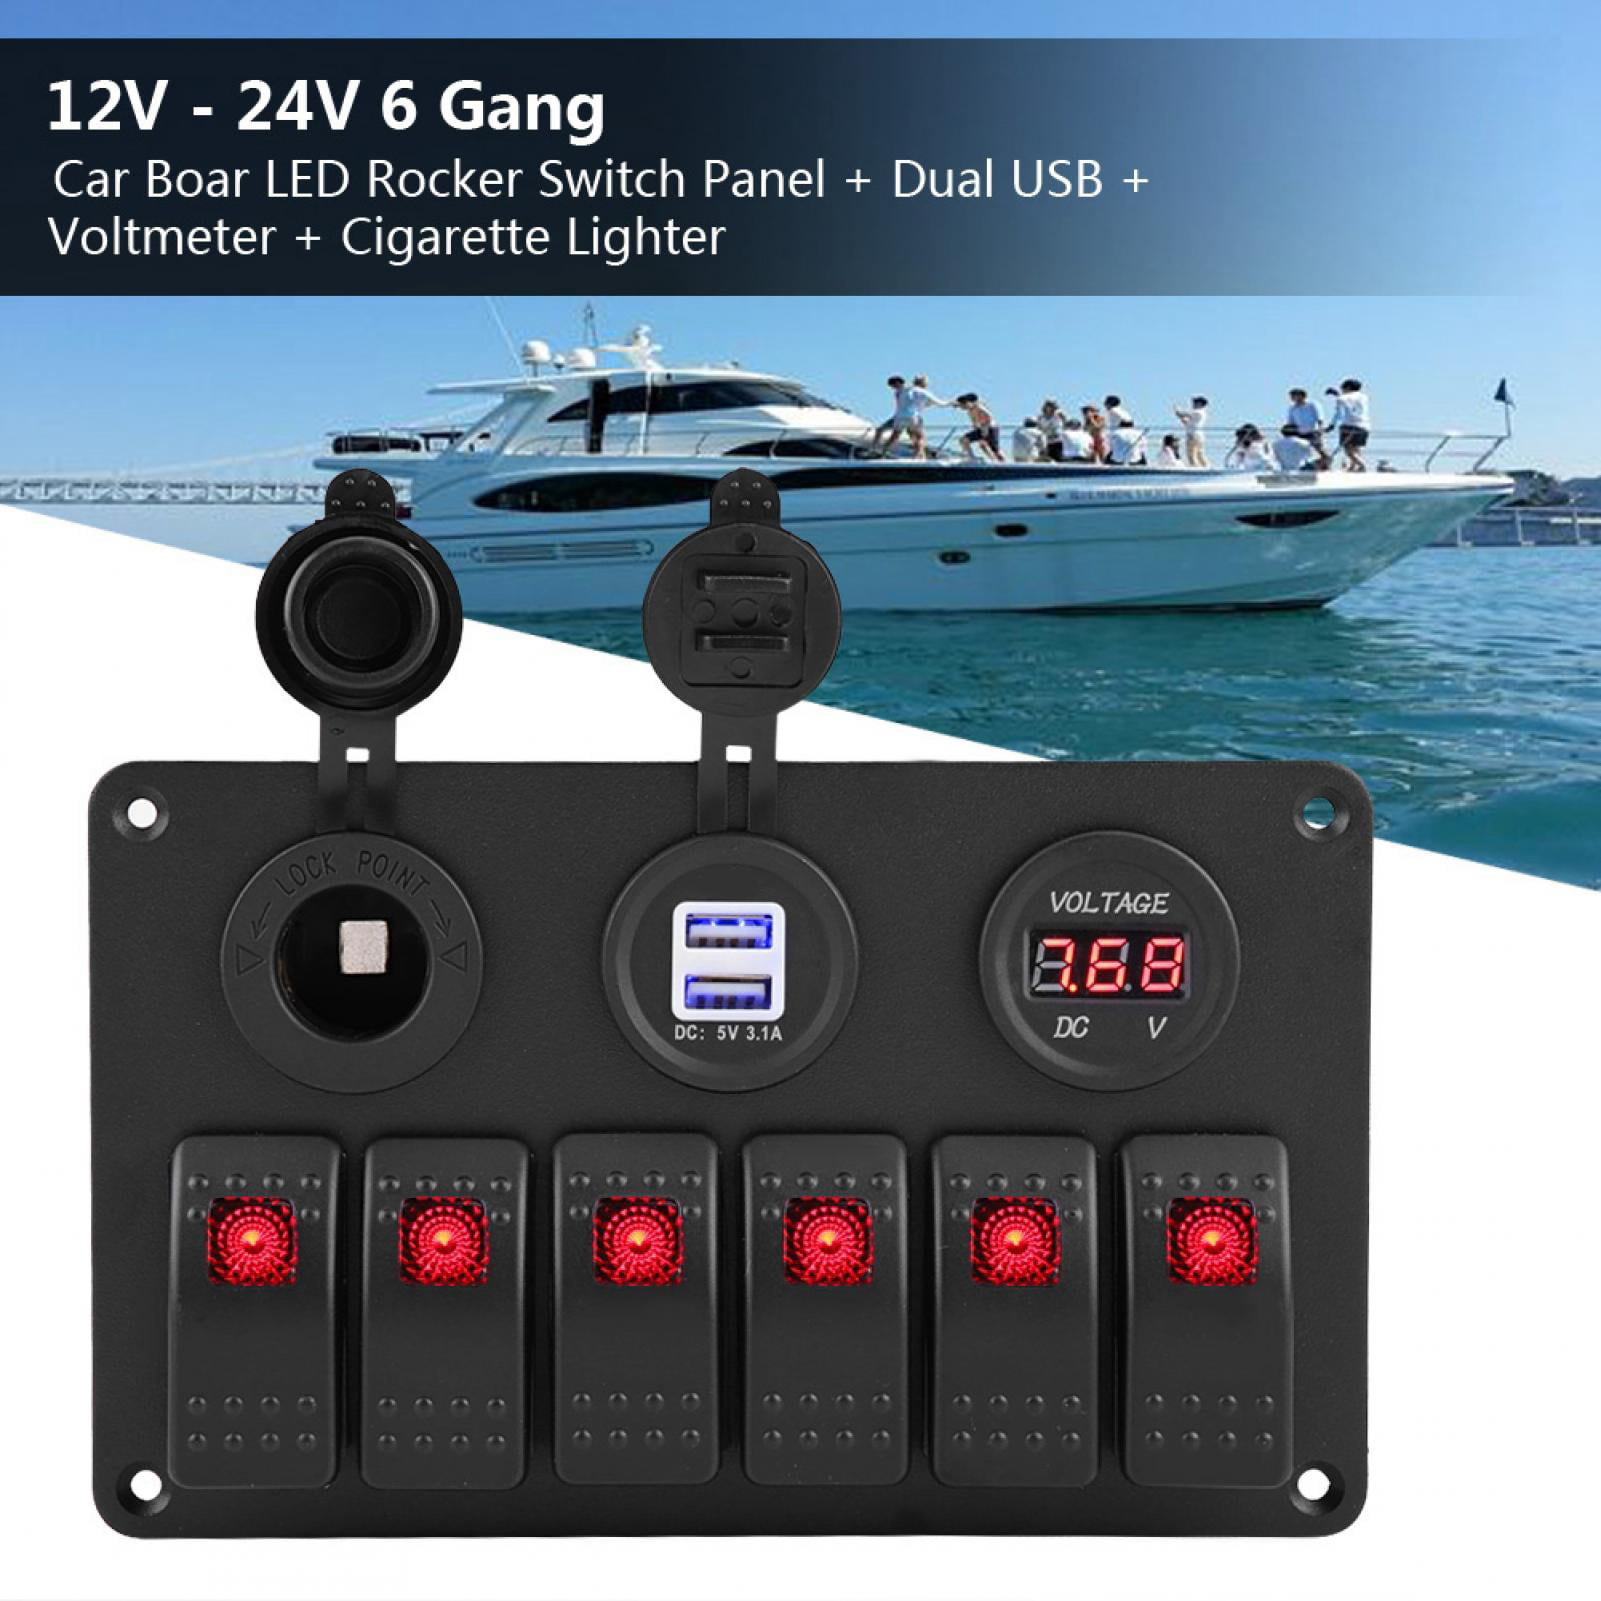 Blue Qiilu 12-24V 6 Gang Rocker Switch Panel for Car RV Boat Yacht Marine 